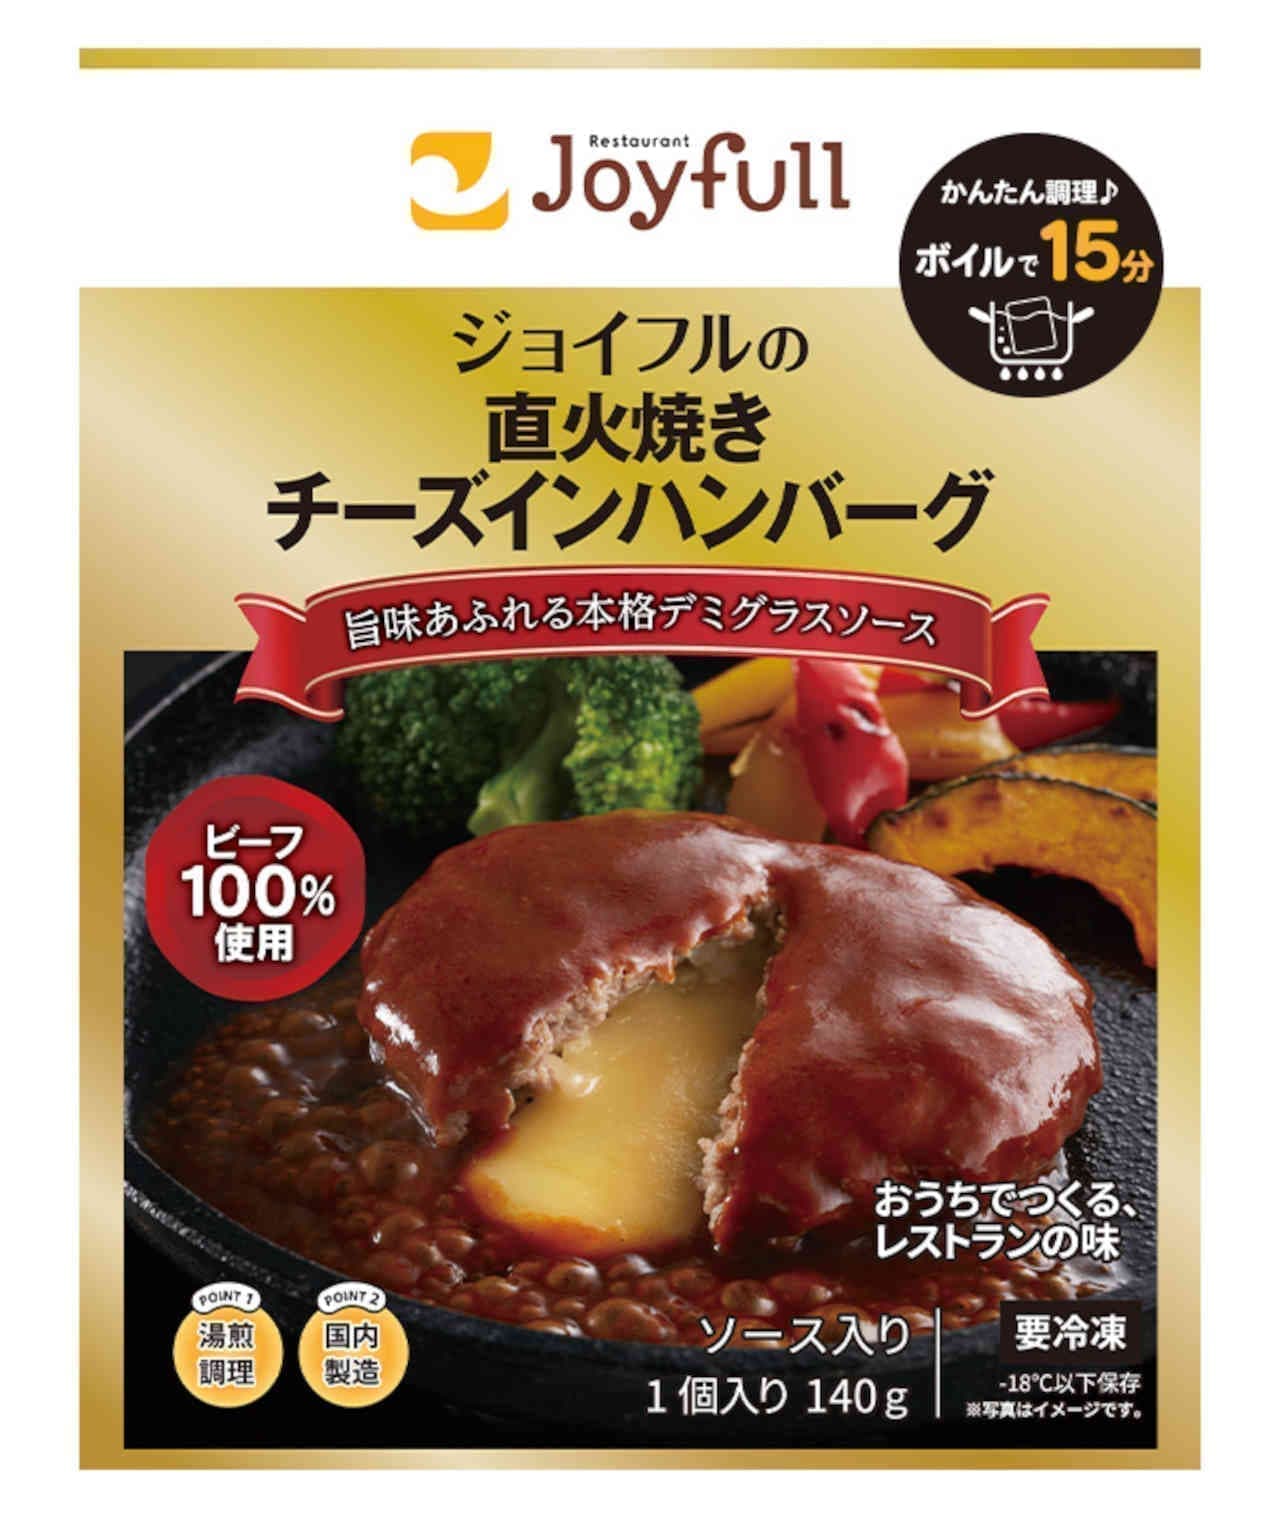 Joyful "Joyful's open-flame grilled cheese-in-hamburger steak with demi-glace sauce"